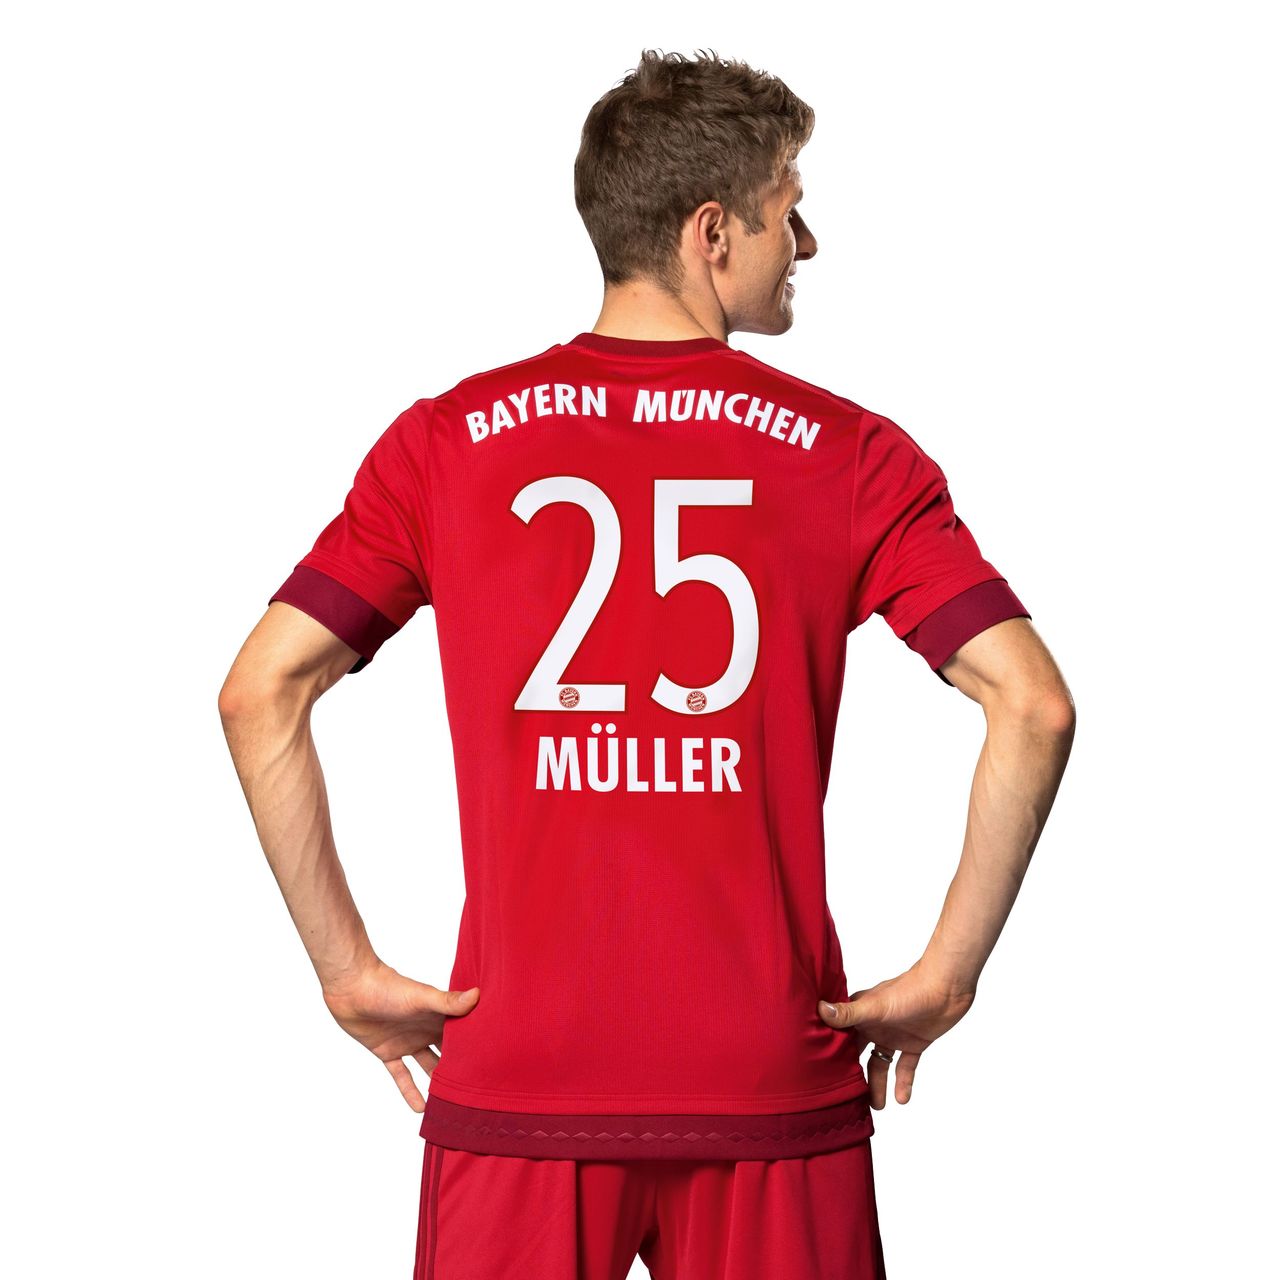 Bayern Munich 15/16 Adidas Home Football Shirt - 15/16 Kits - Football shirt blog